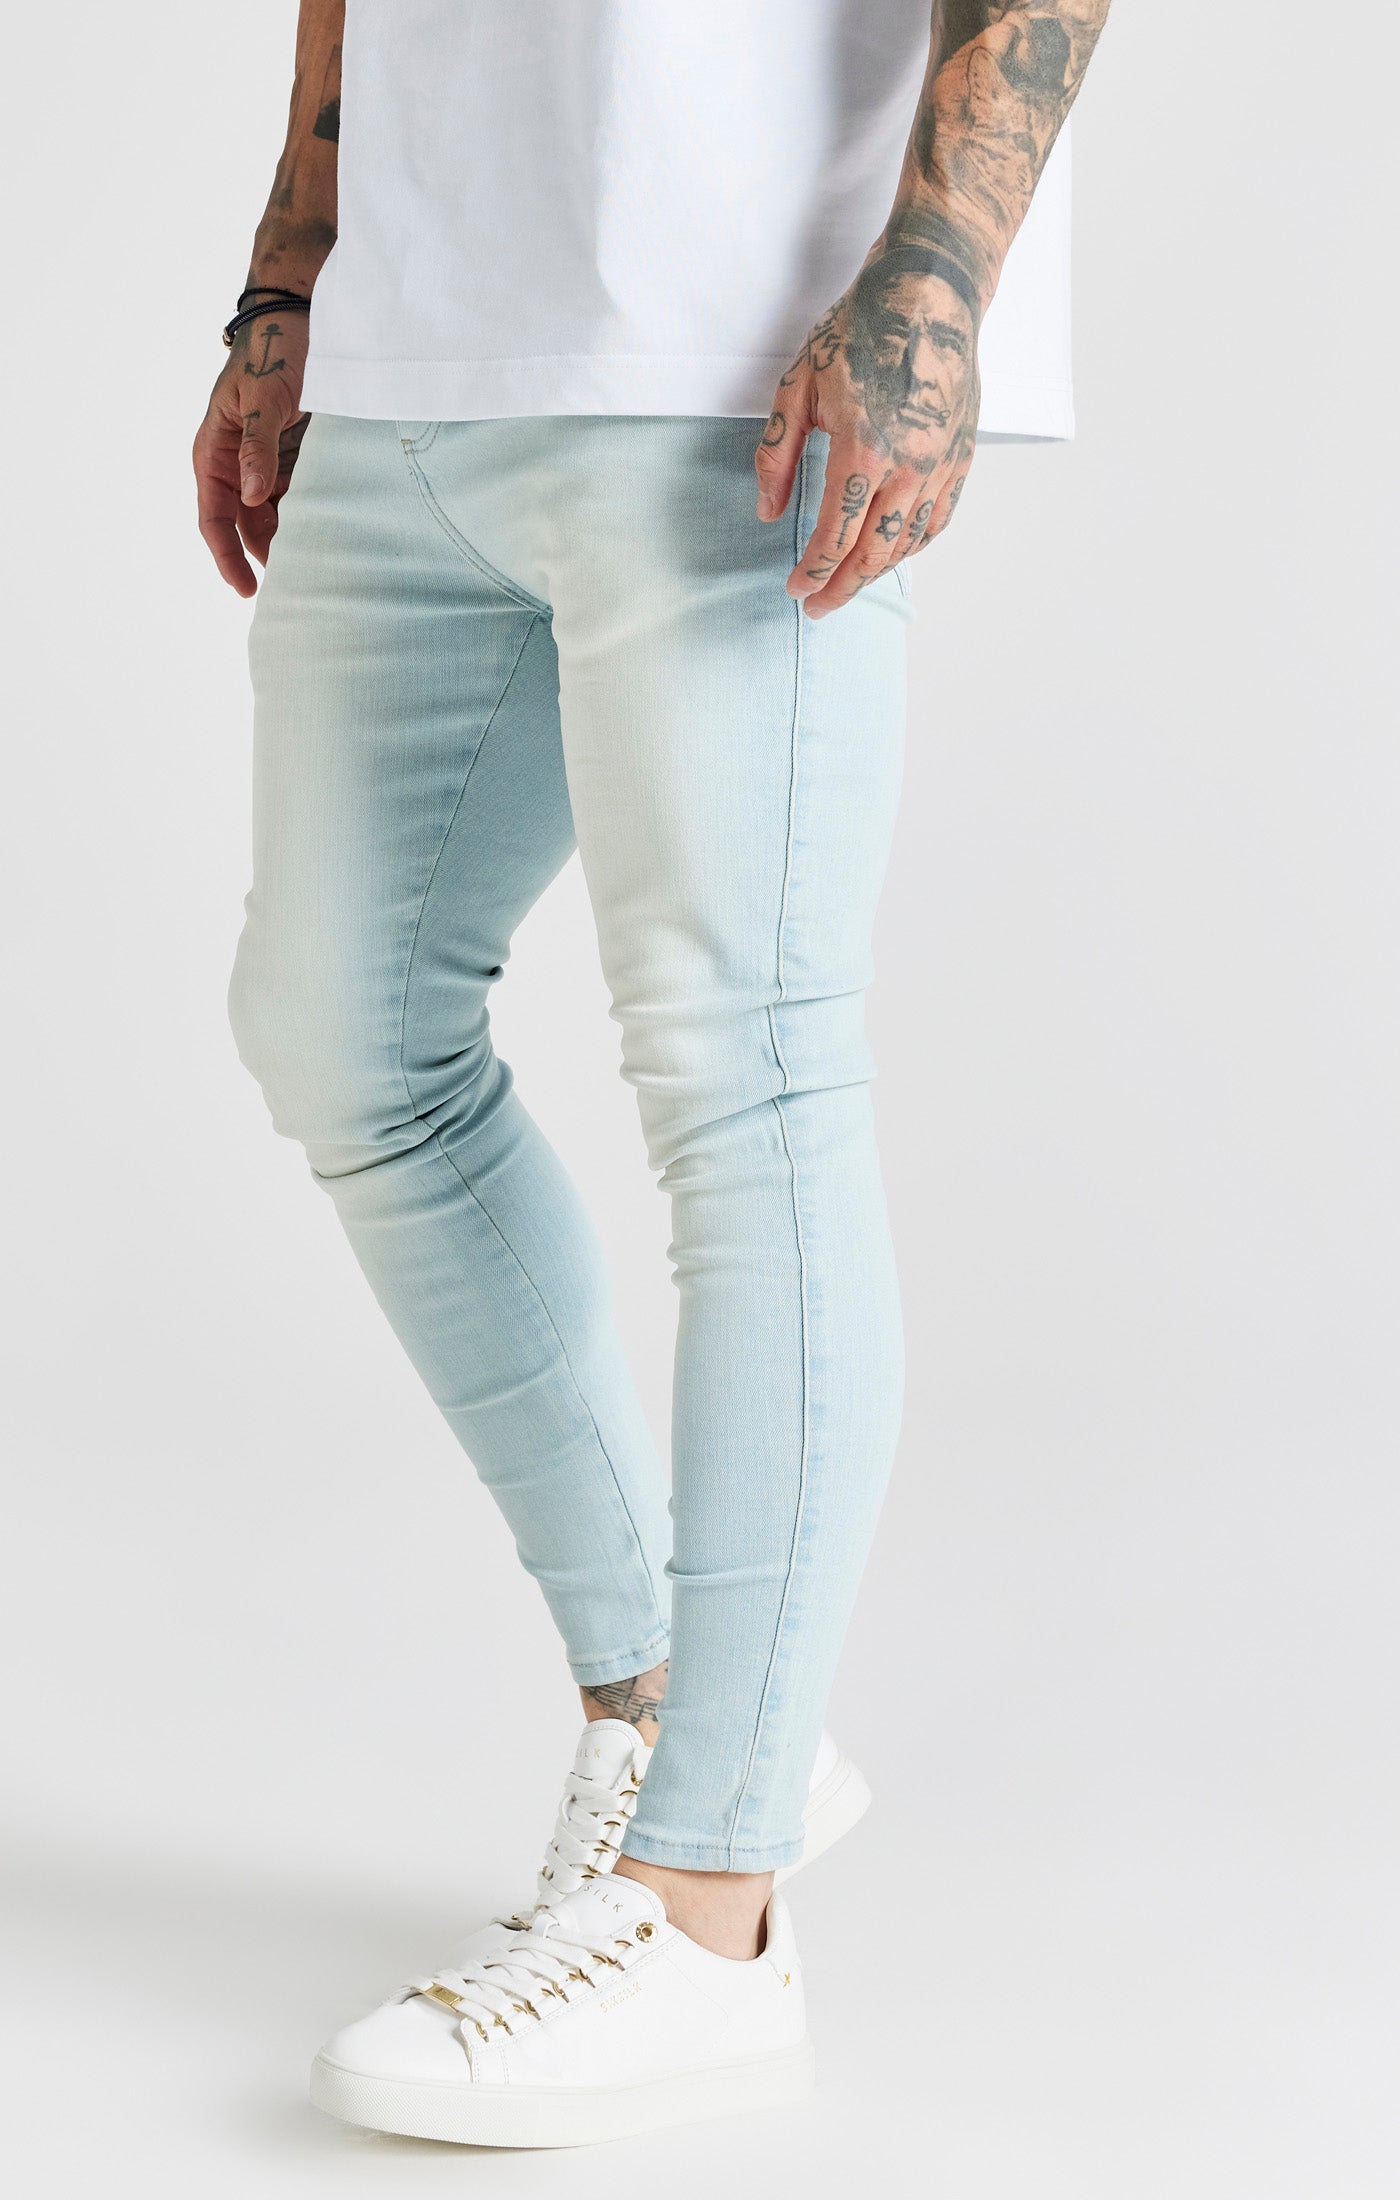 kpoplk Men's Jeans,Men's Fashion Slim Fit Distressed Denim Pants Leisure  Stretch Ripped Skinny Jeans Trousers(Blue,XXL) - Walmart.com